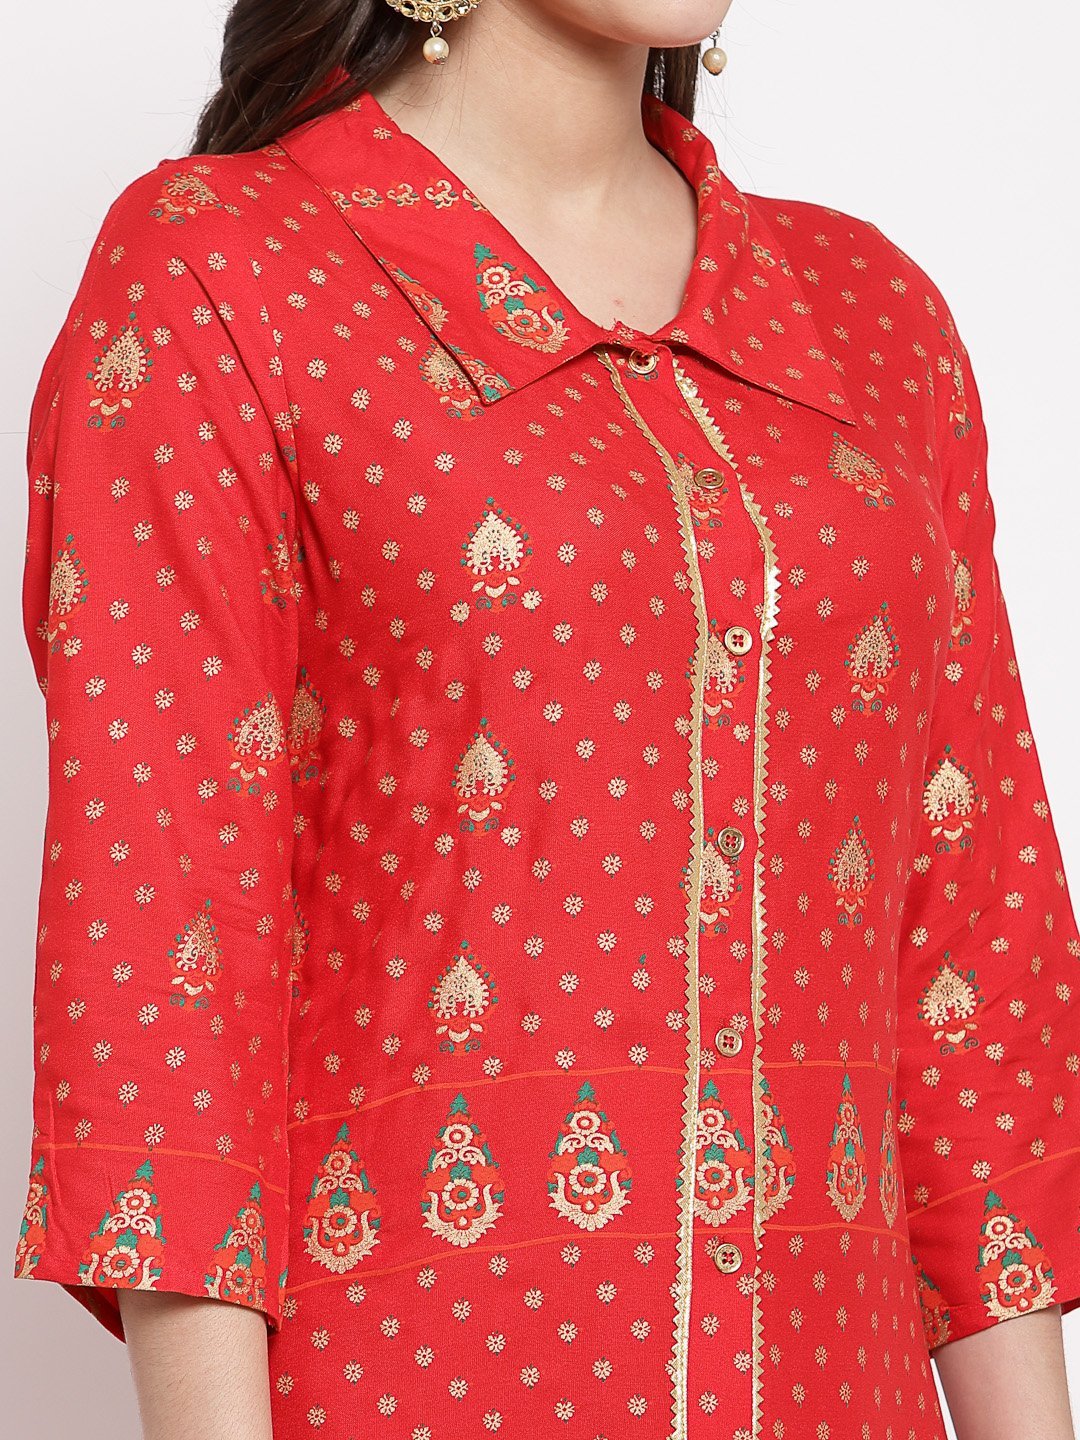 Women's Red Cotton Printed 3/4 Sleeve Collar Neck Casual Anarkali Kurta - Myshka